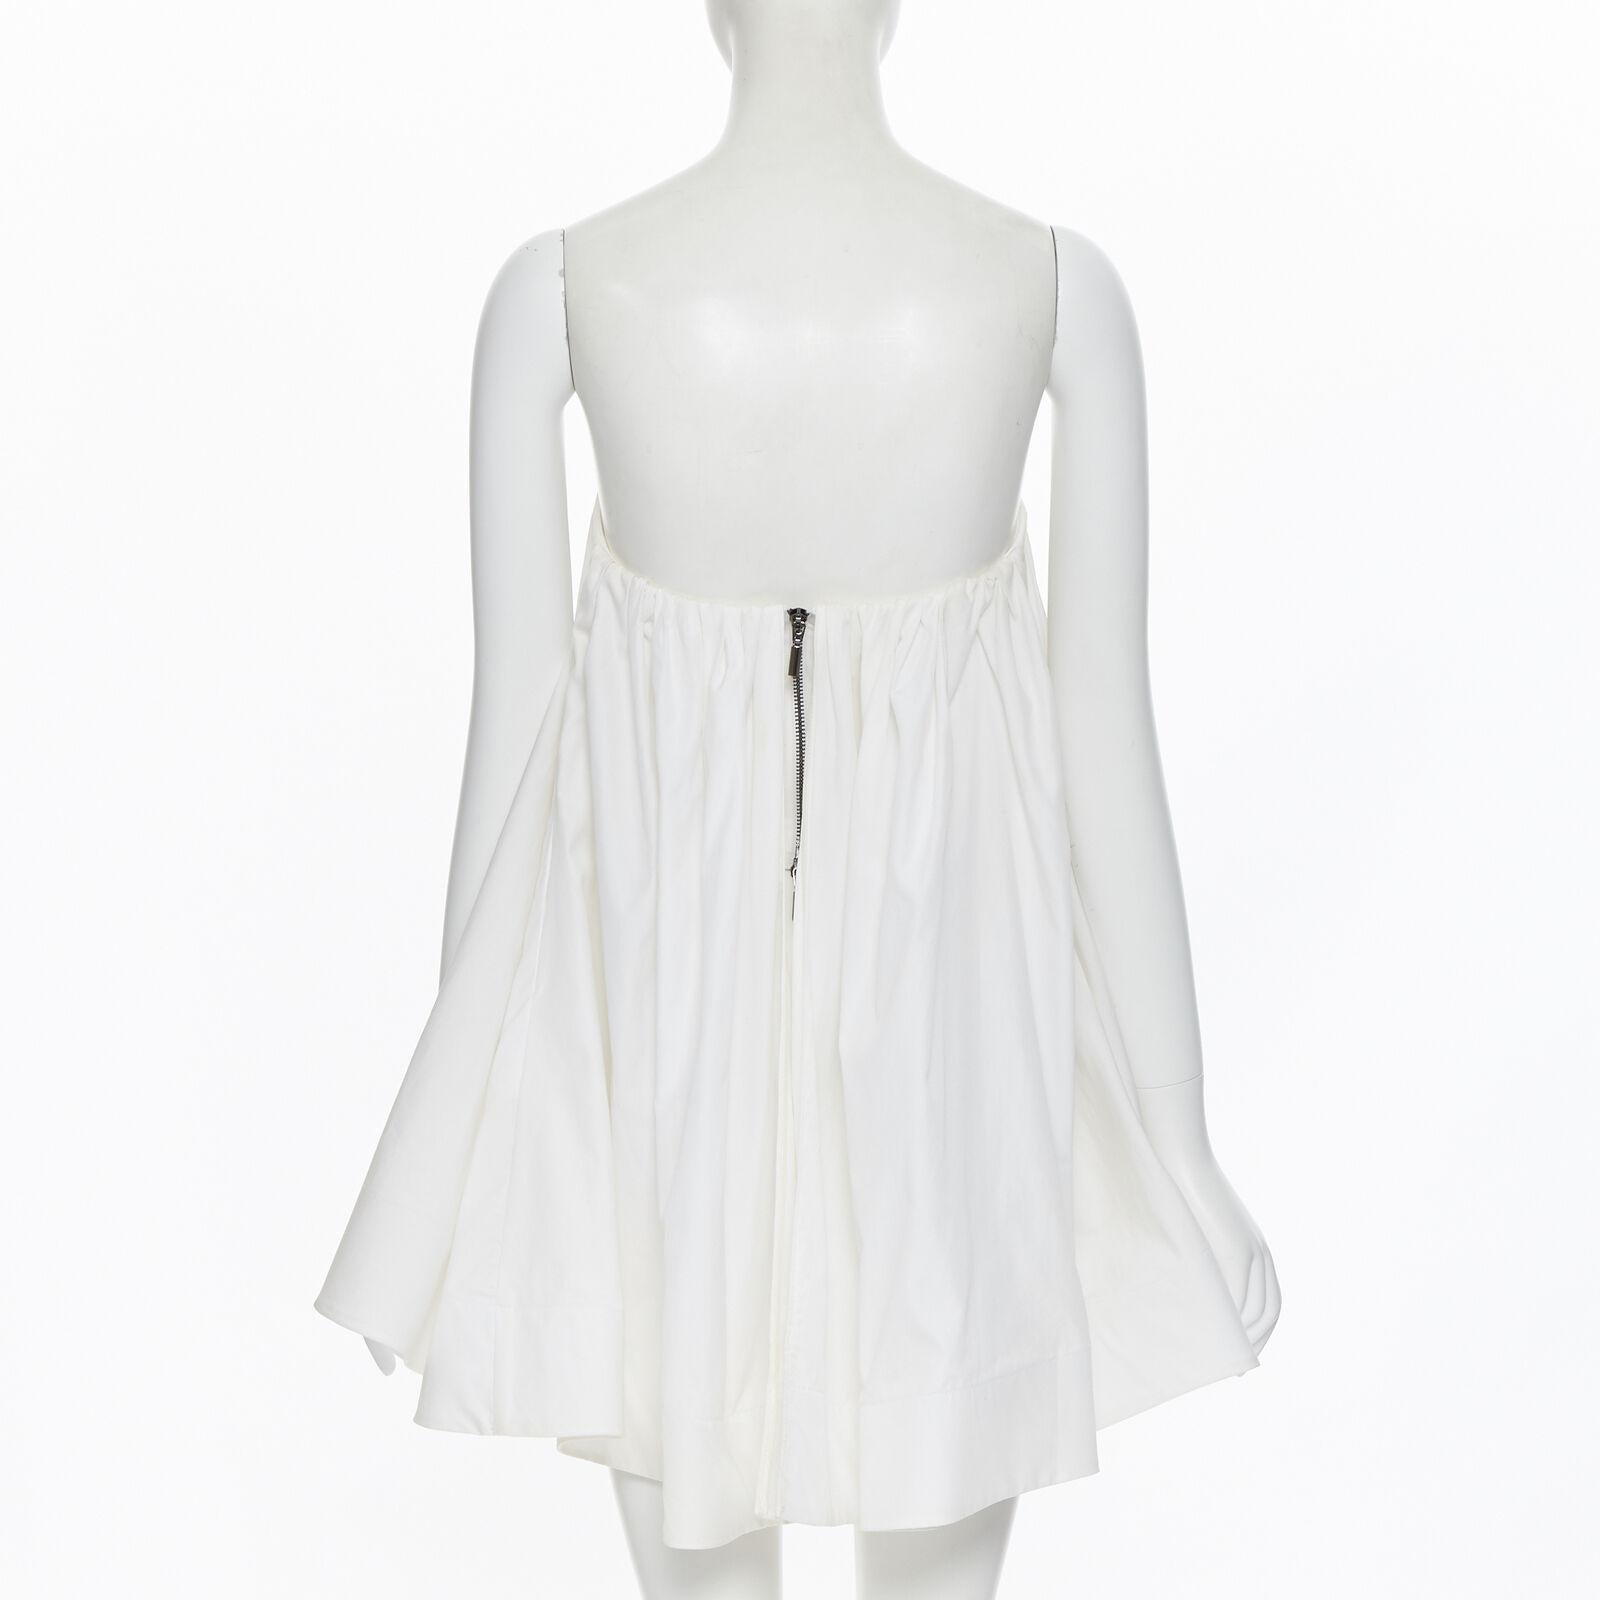 MATICEVSKI 2016 Profound Top white cotton boned corset strapless flared top XS For Sale 2